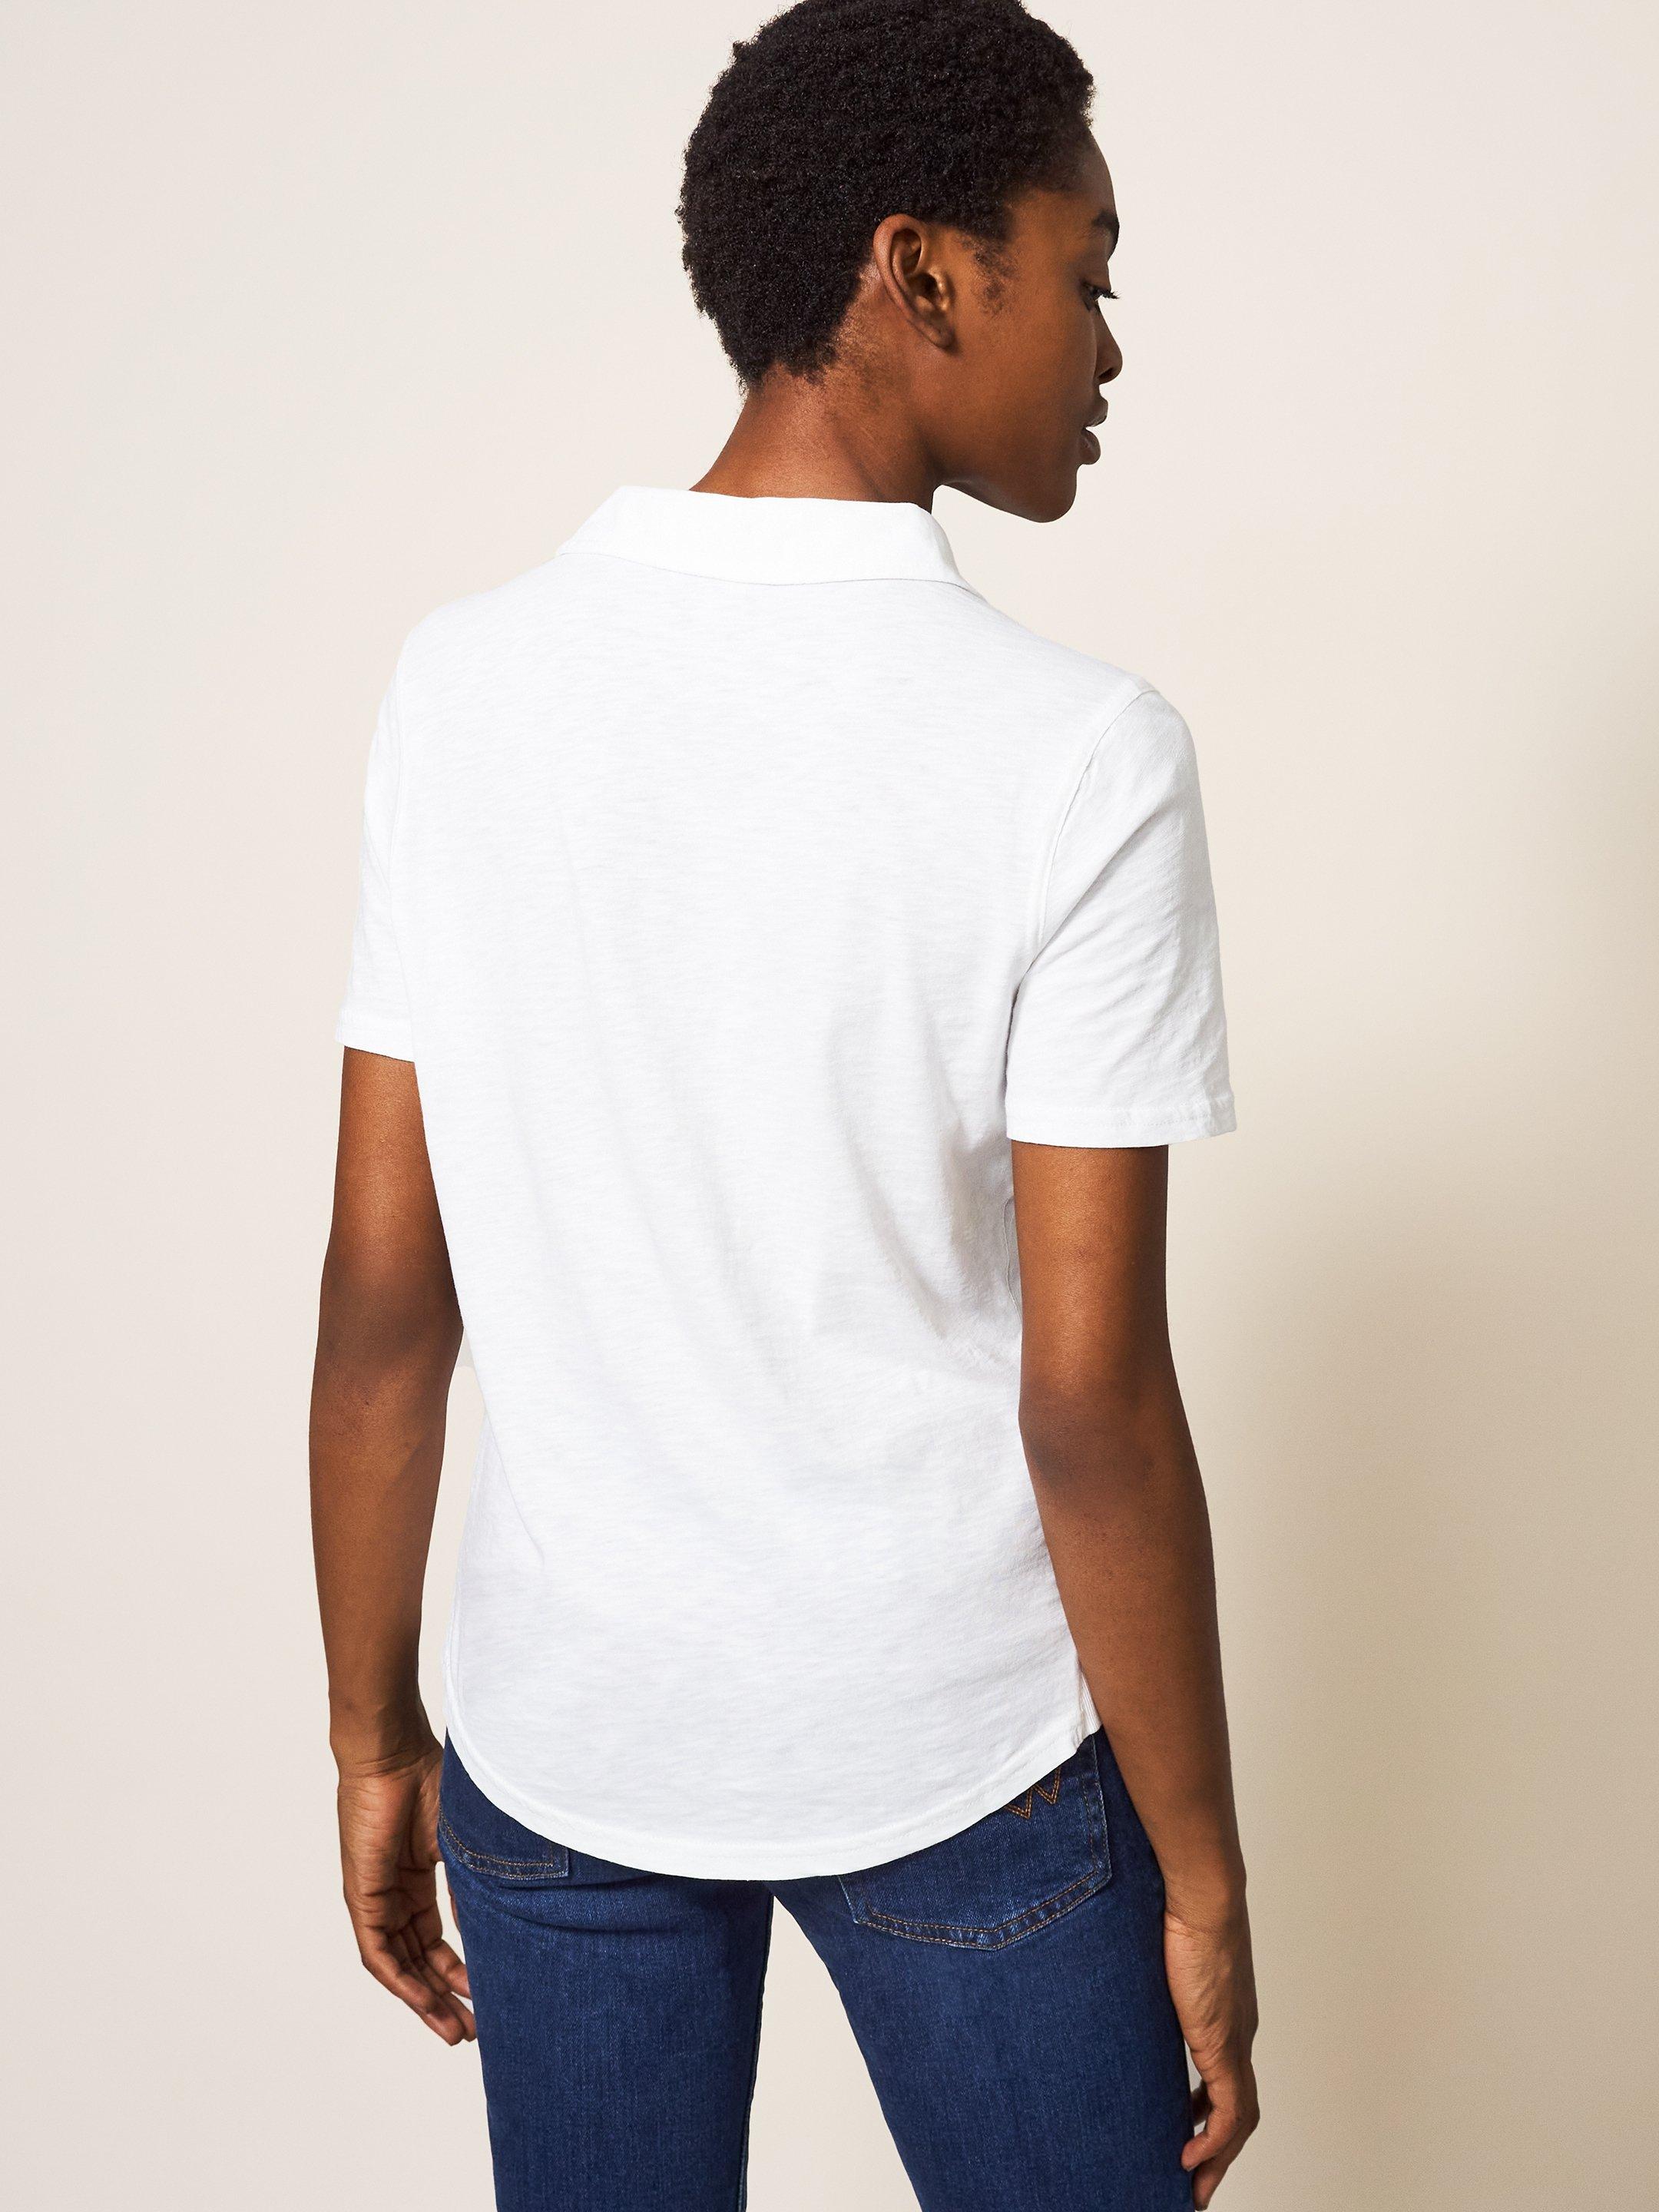 Penny Pocket Jersey Shirt in BRIL WHITE - MODEL BACK